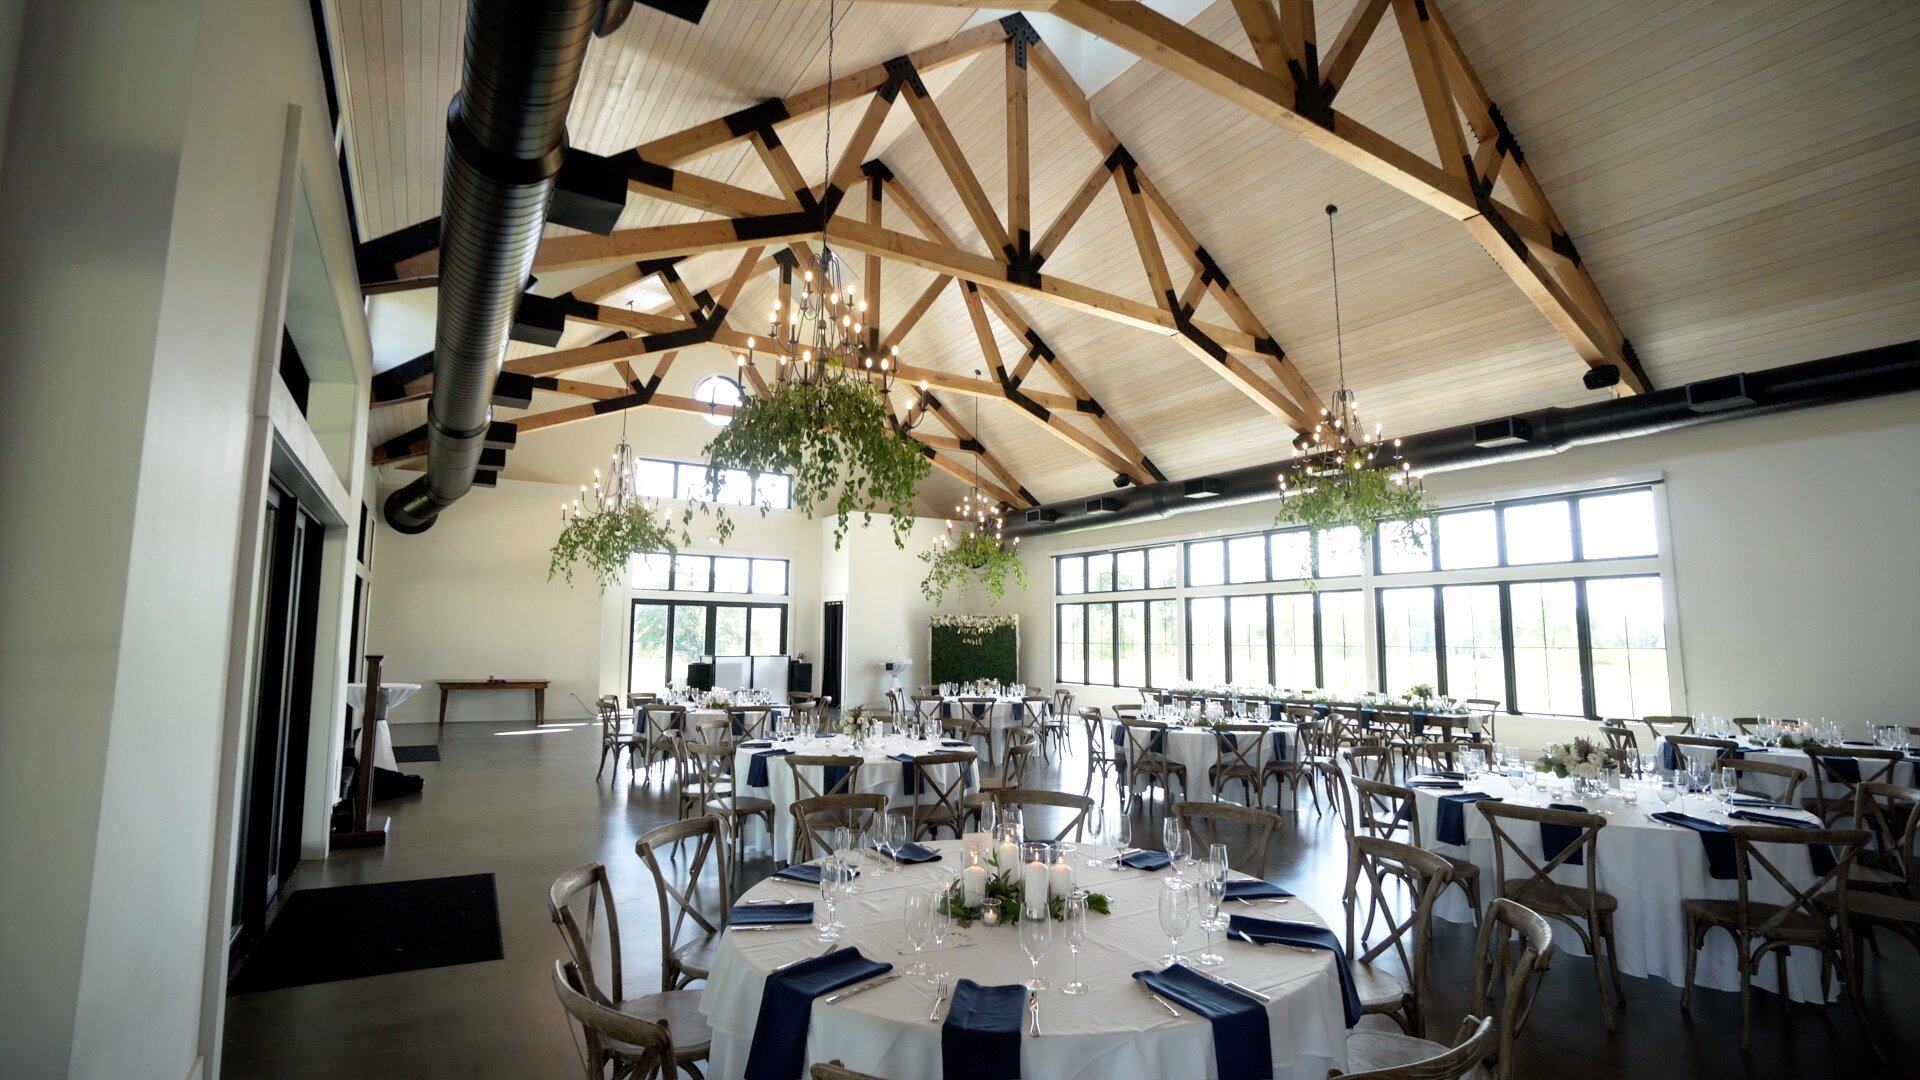 The Carriage House Wedding Venue photo of interior decor